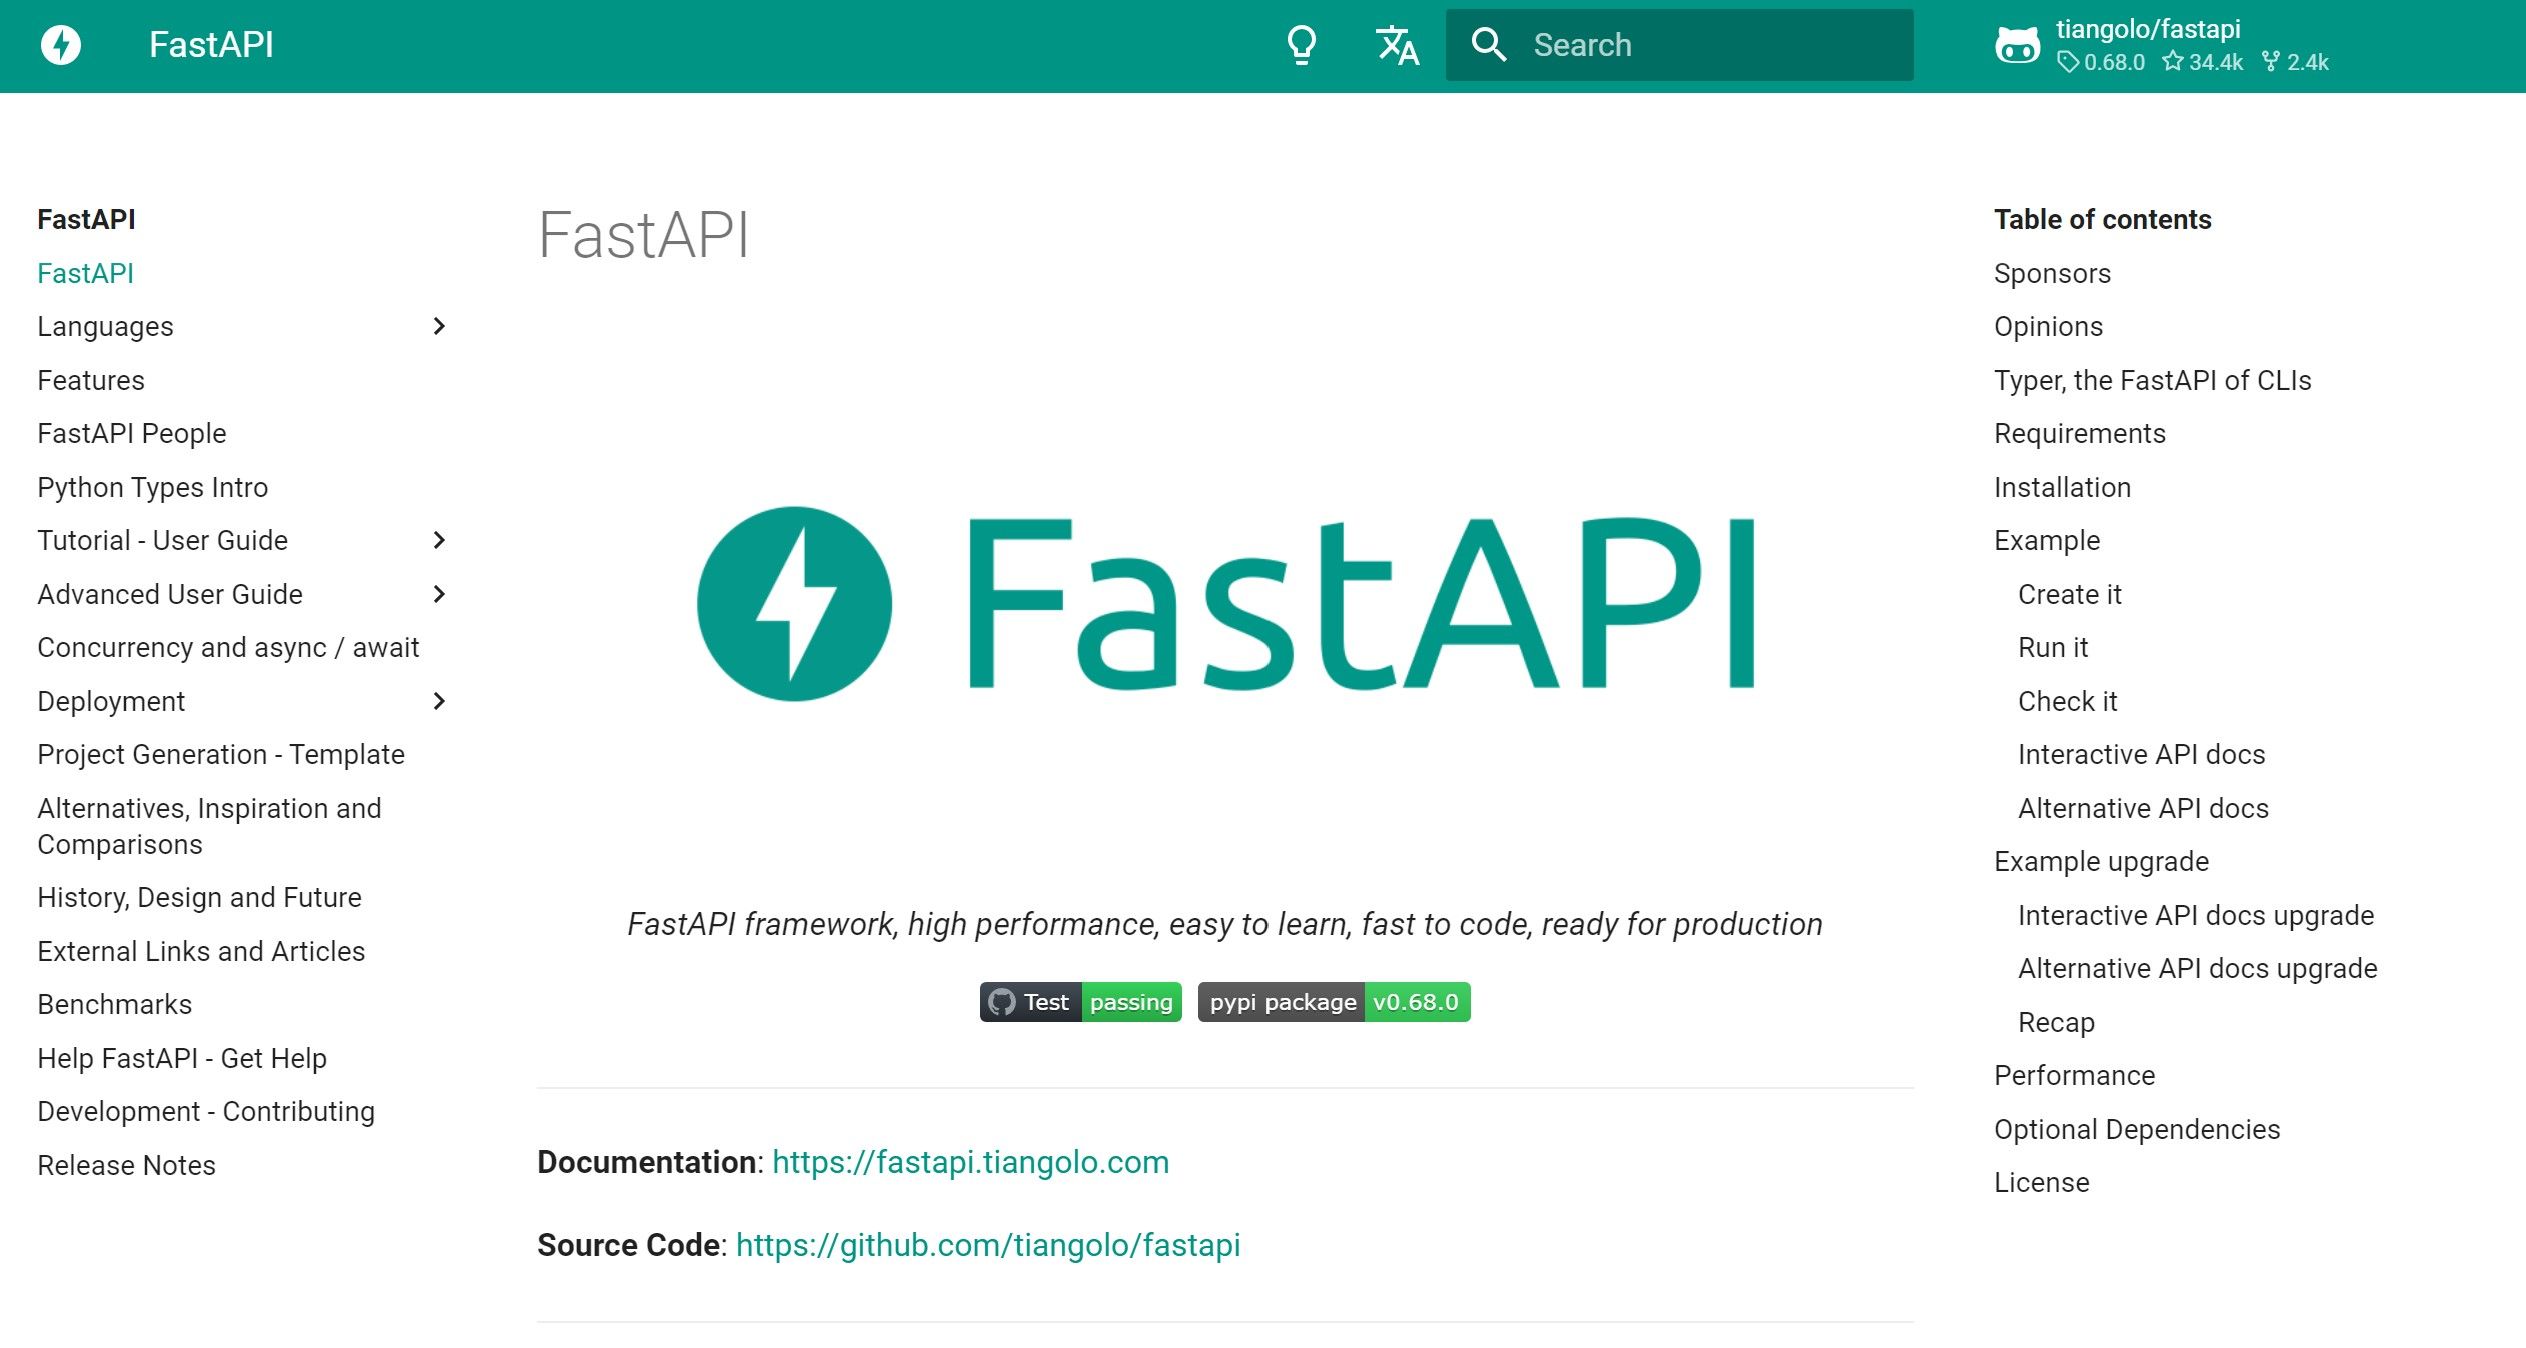 FastAPI website interface